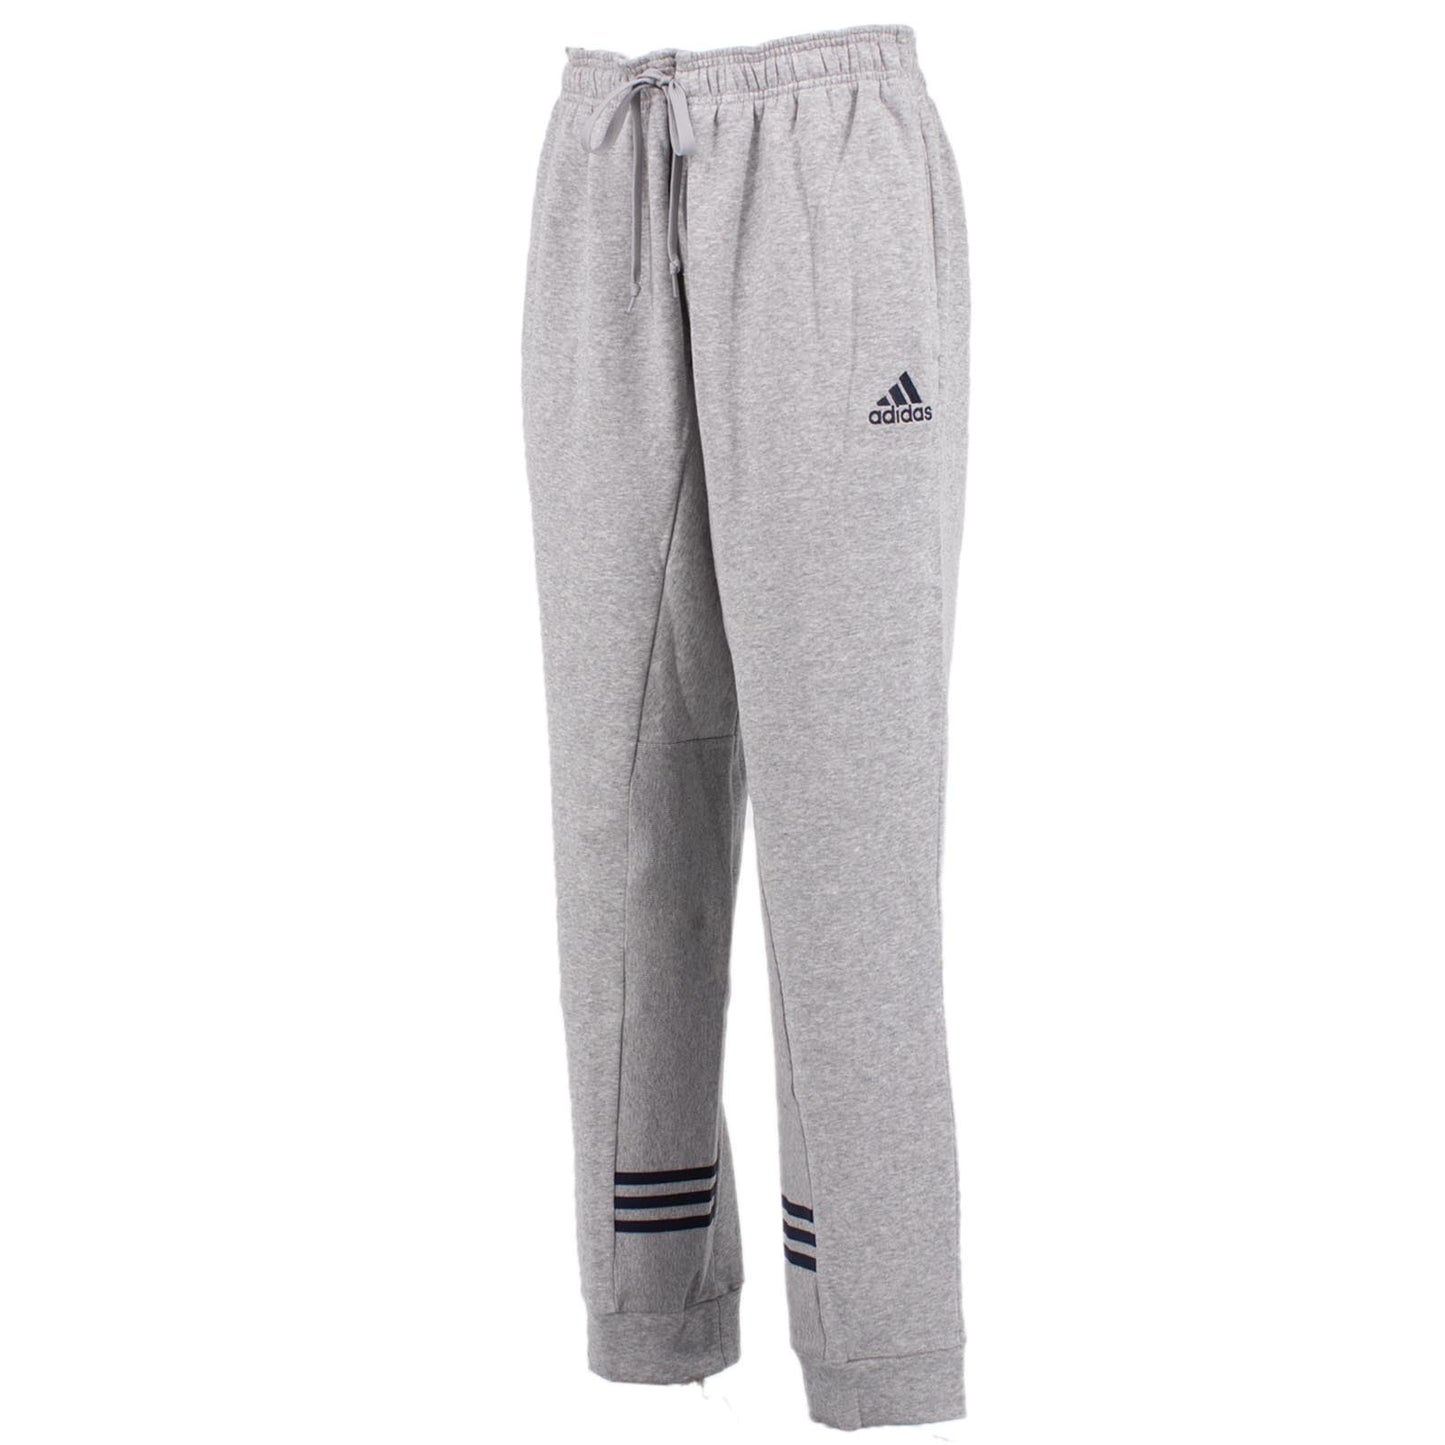 Adidas Essentials Comfort Fitness Pants Herren Hose Jogginghose Grau GD5453 LT